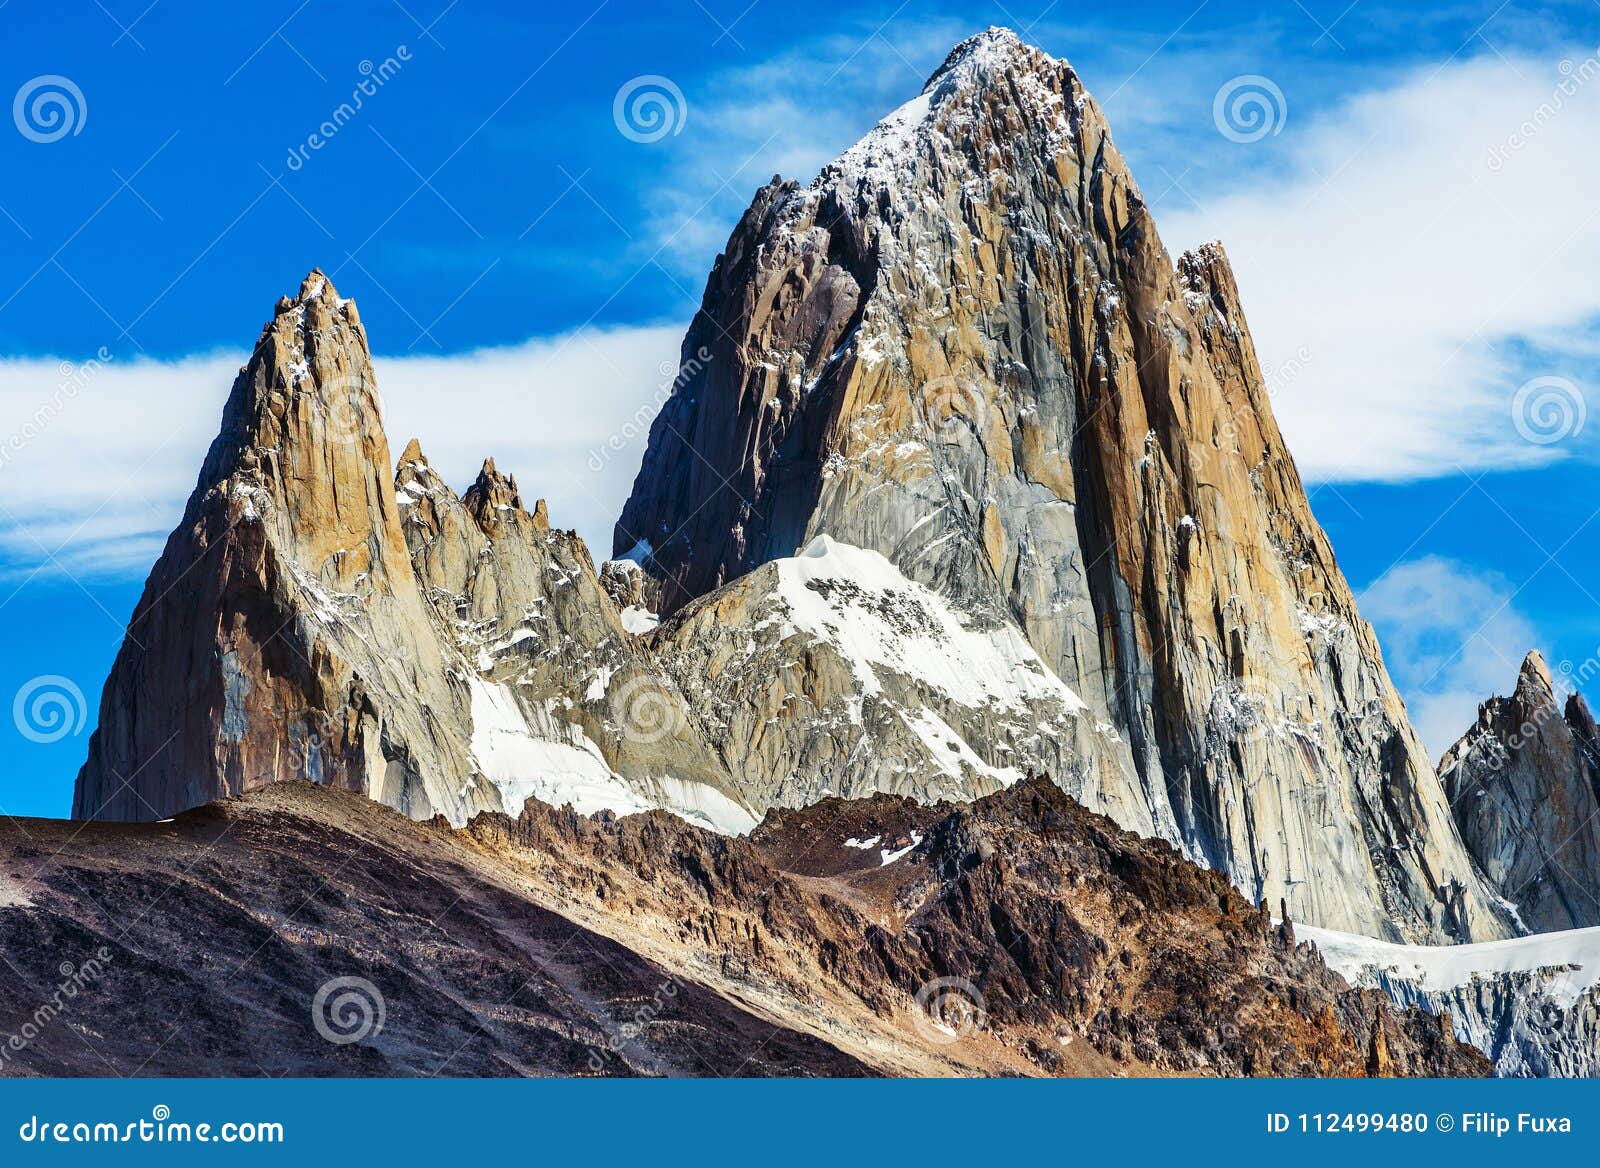 mount fitz roy at los glaciares national park in argentina